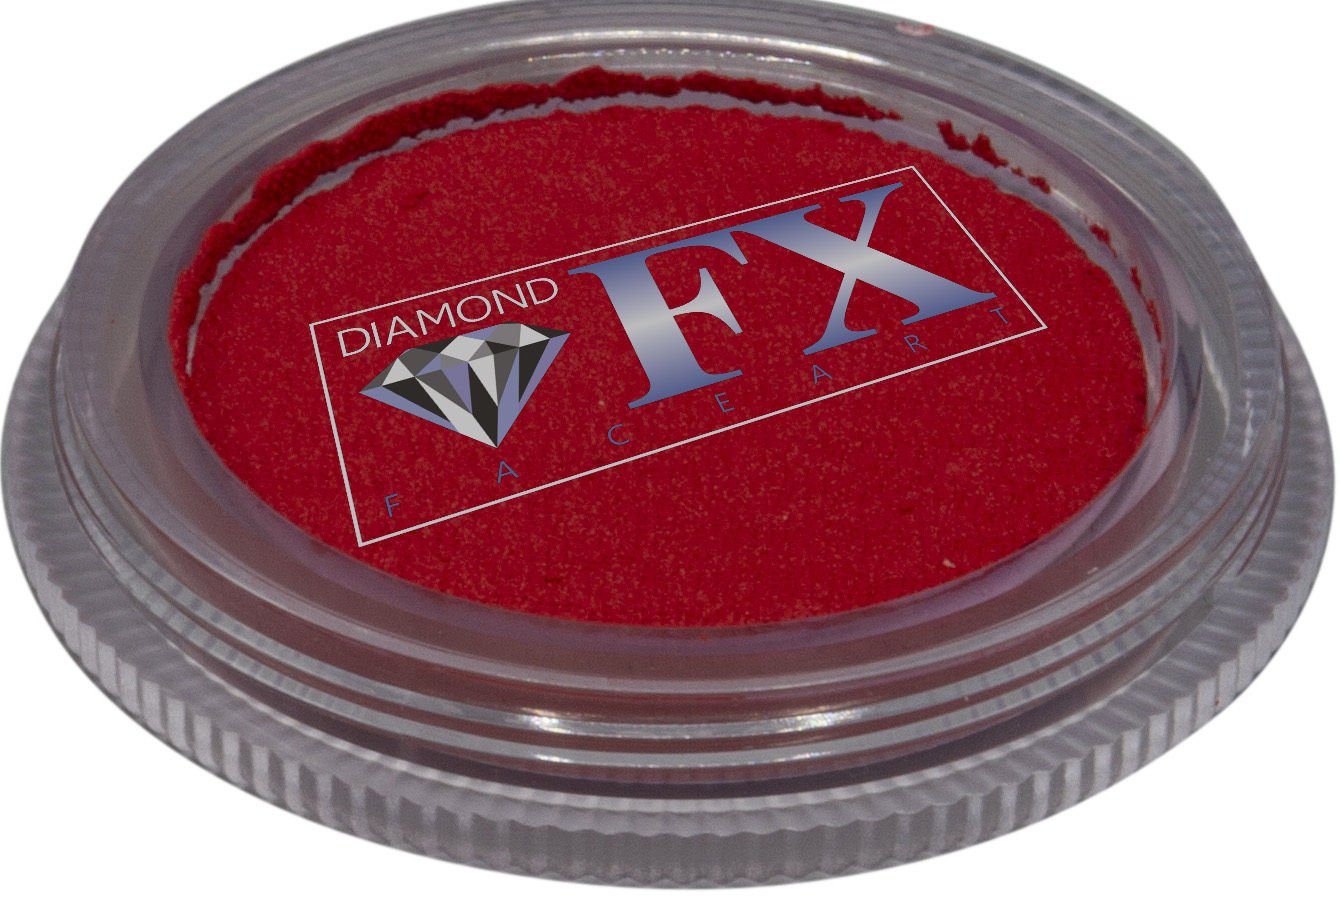 Diamond FX Red 30g - Small Image